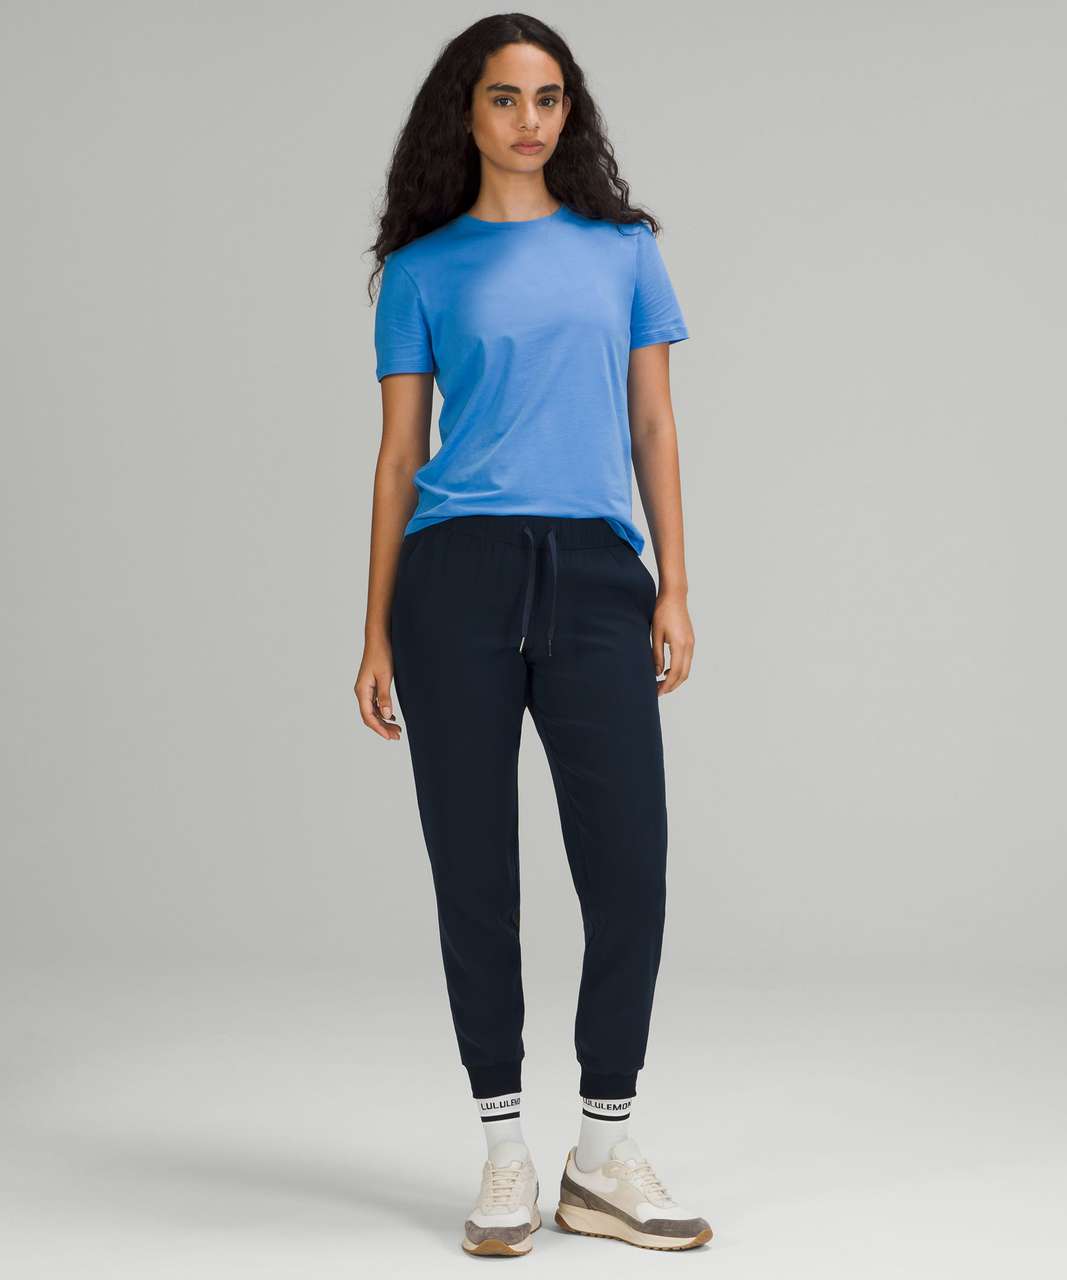 Lululemon Love Crew Short Sleeve T-Shirt - Blue Nile